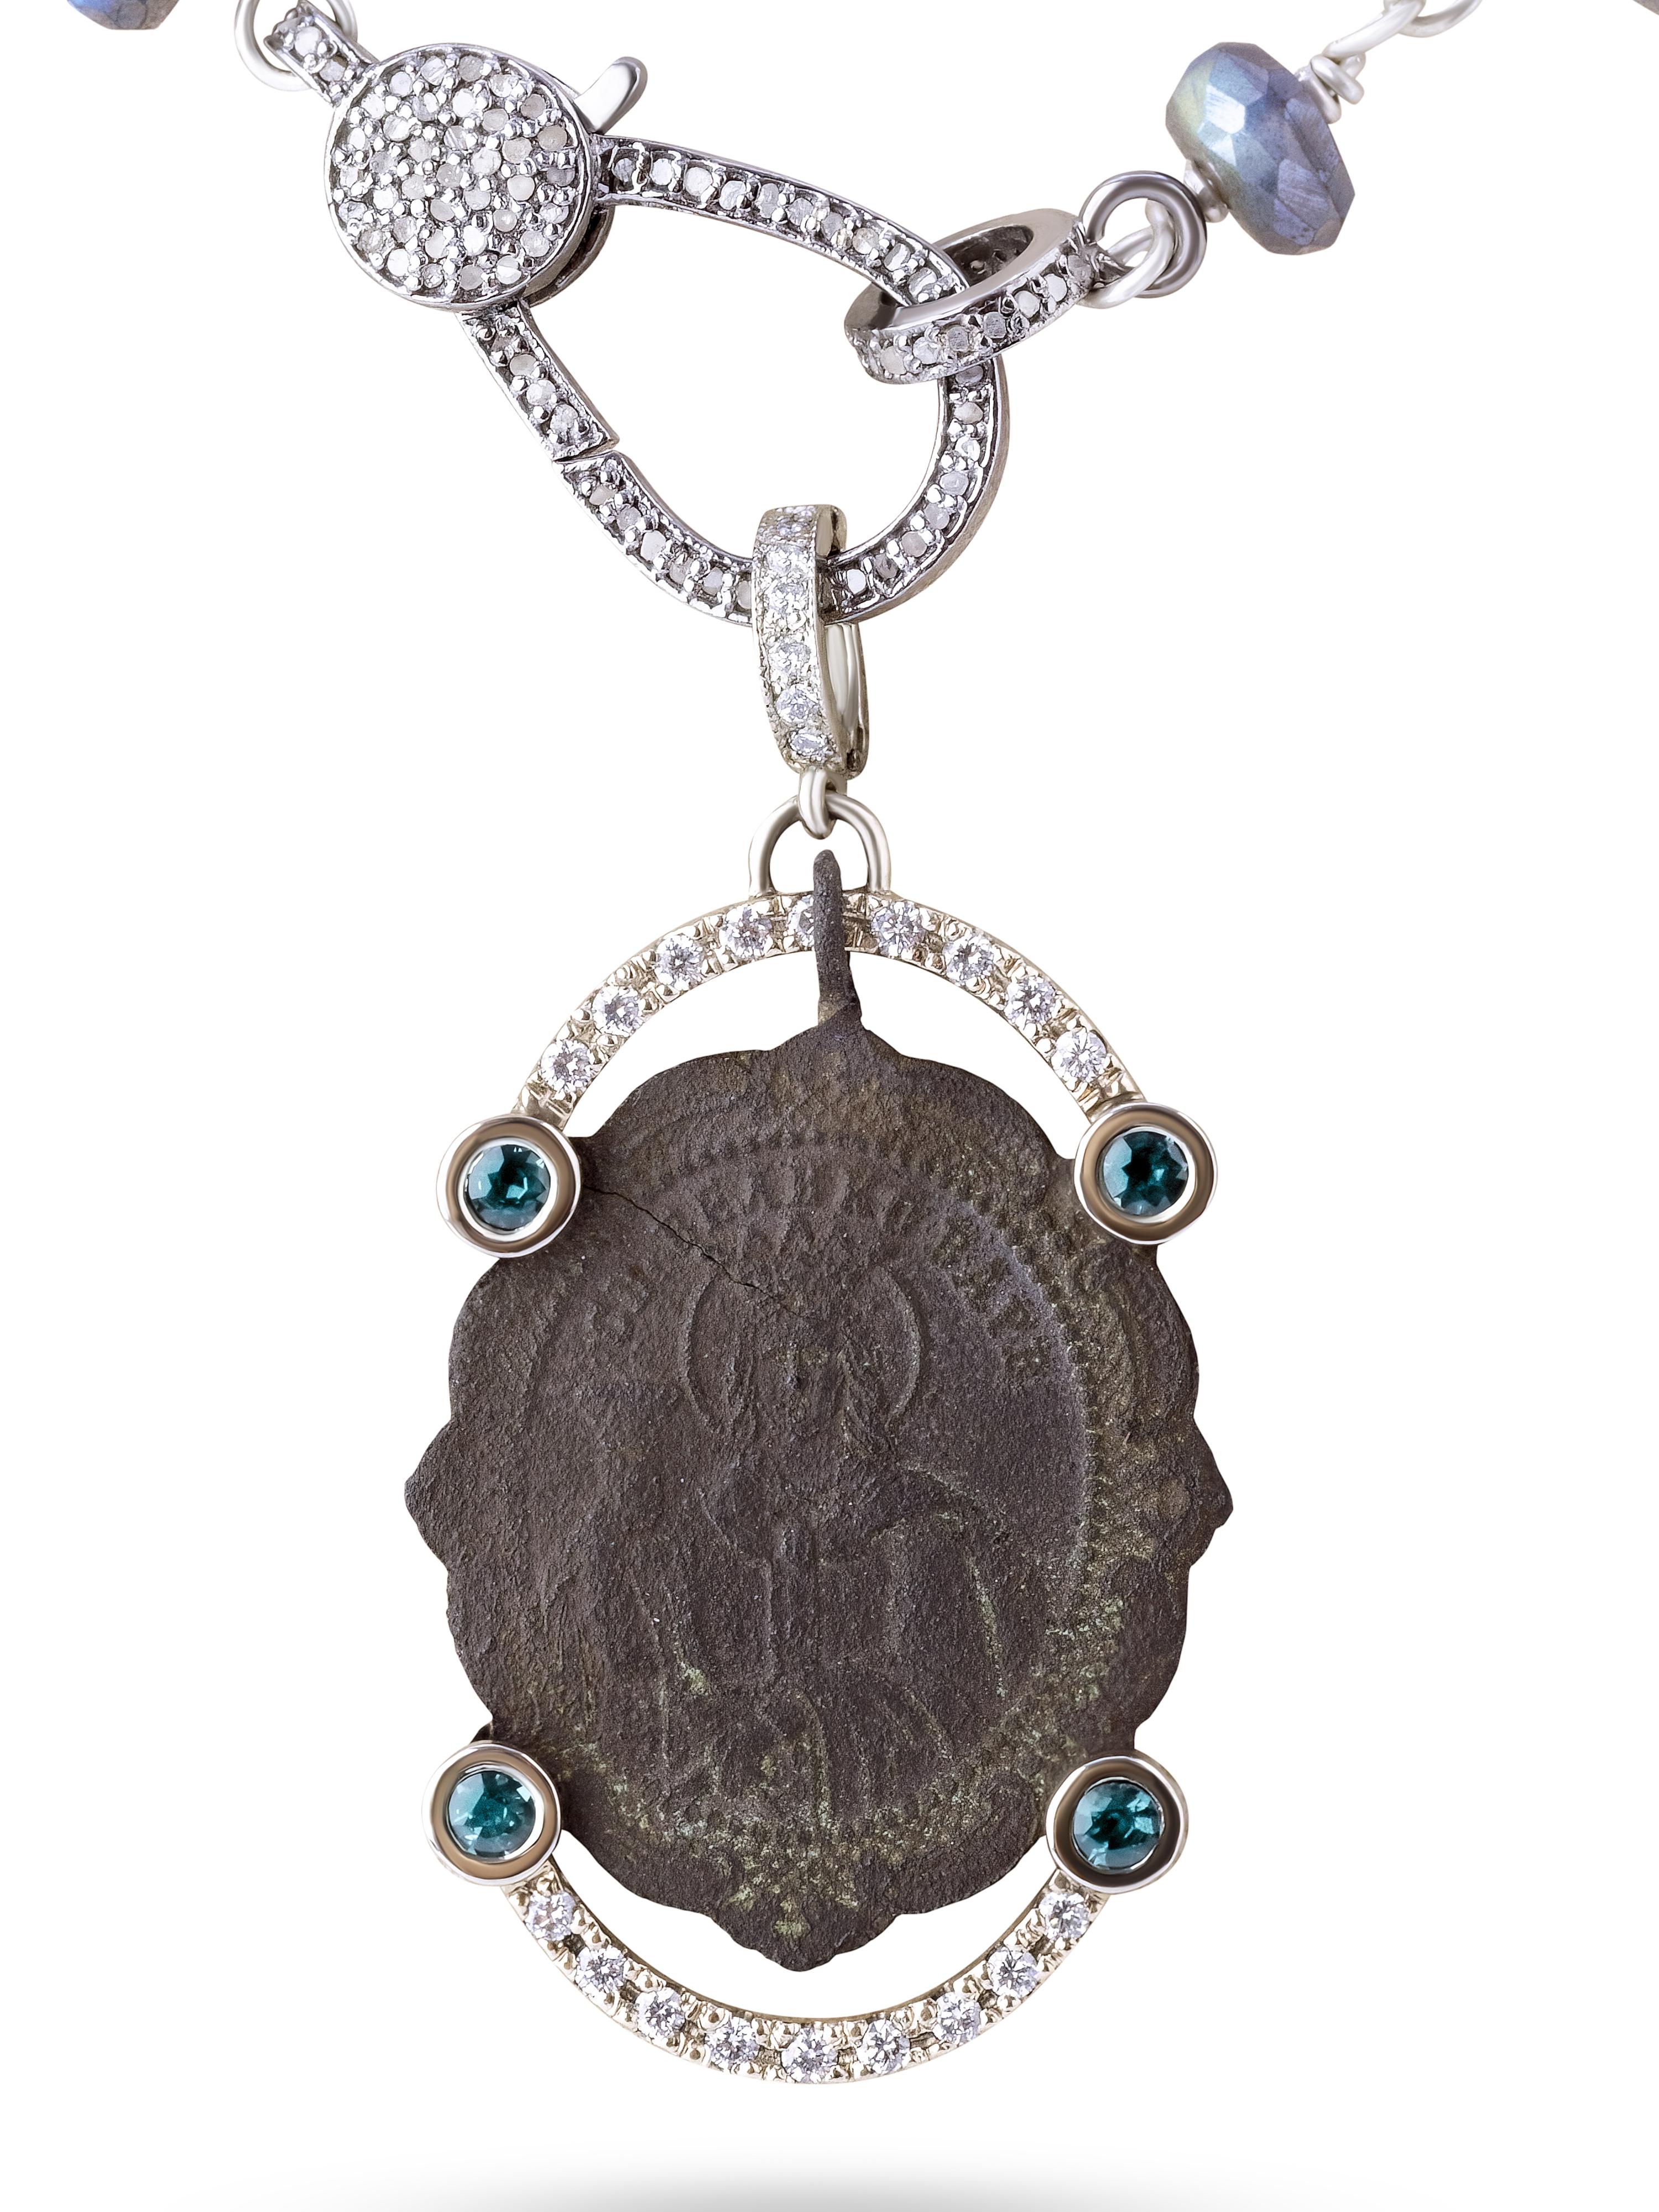 17th century jewelry